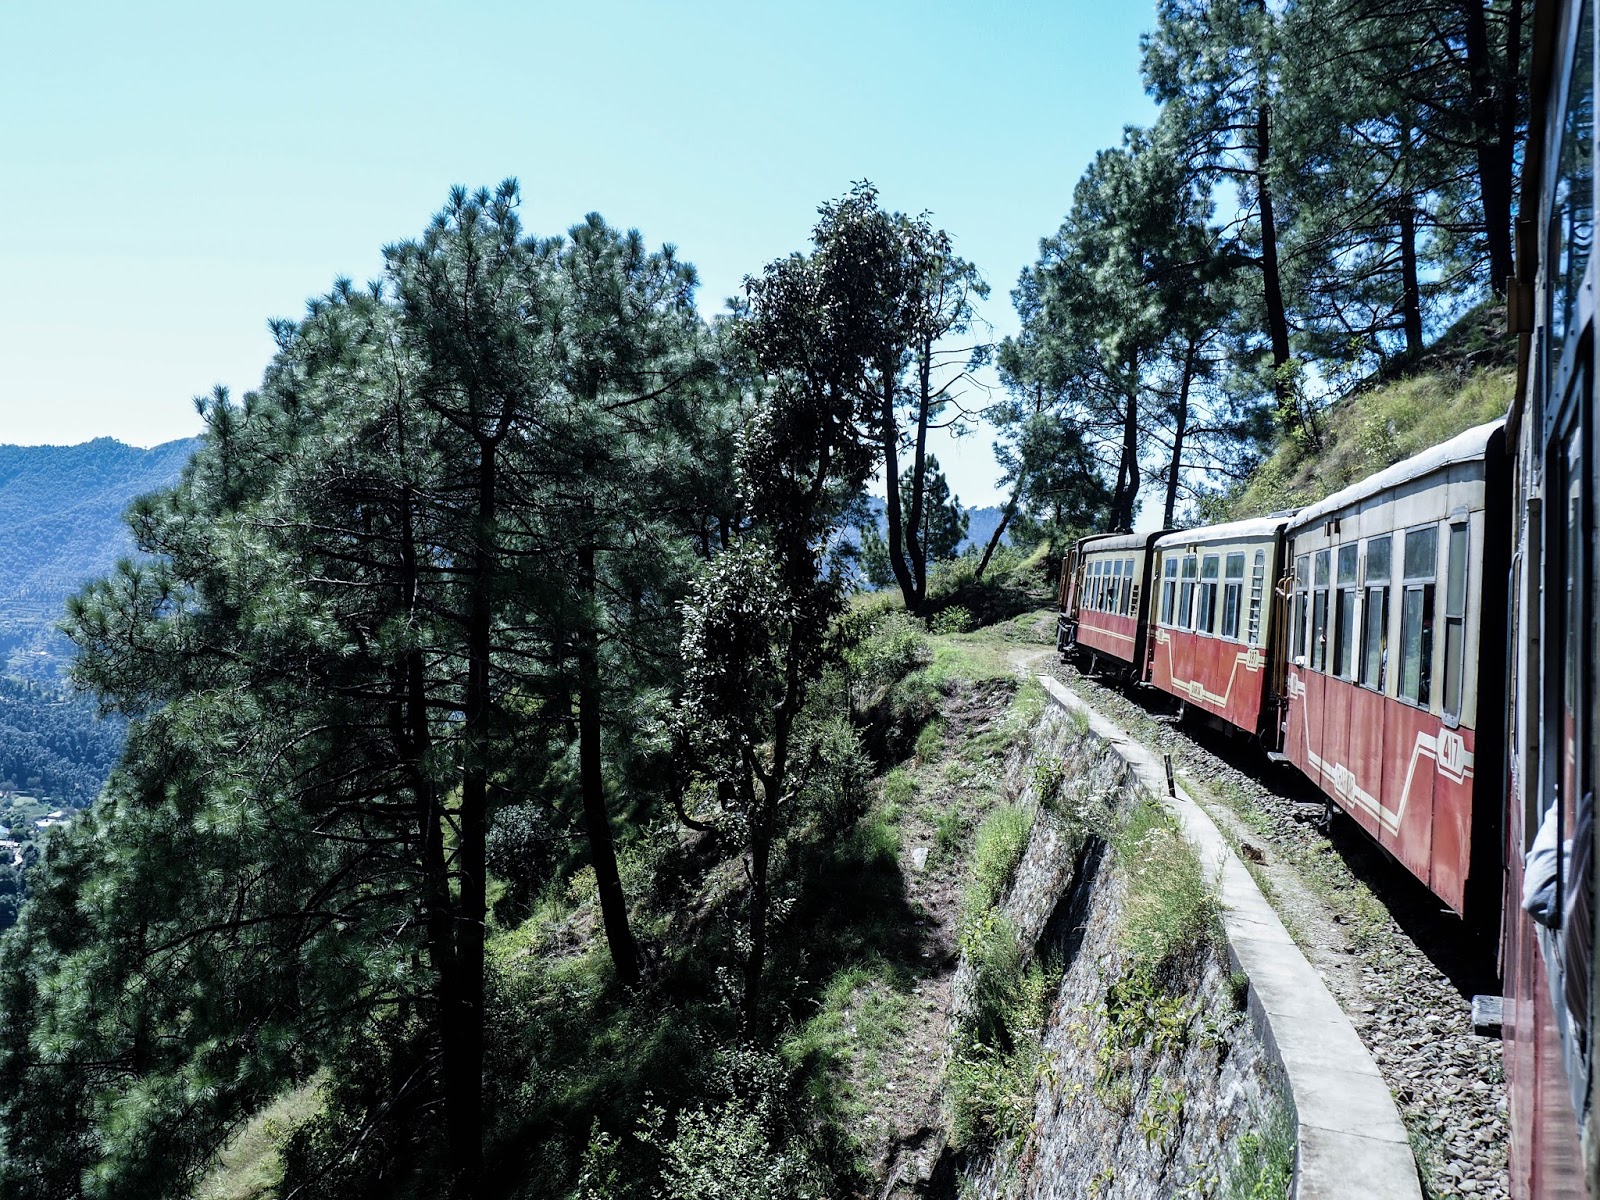 Intia, India, Kalka, Shimla, rautatie, railway, Northern India, Pohjois-Intia, train trip, junamatka, toy train, 